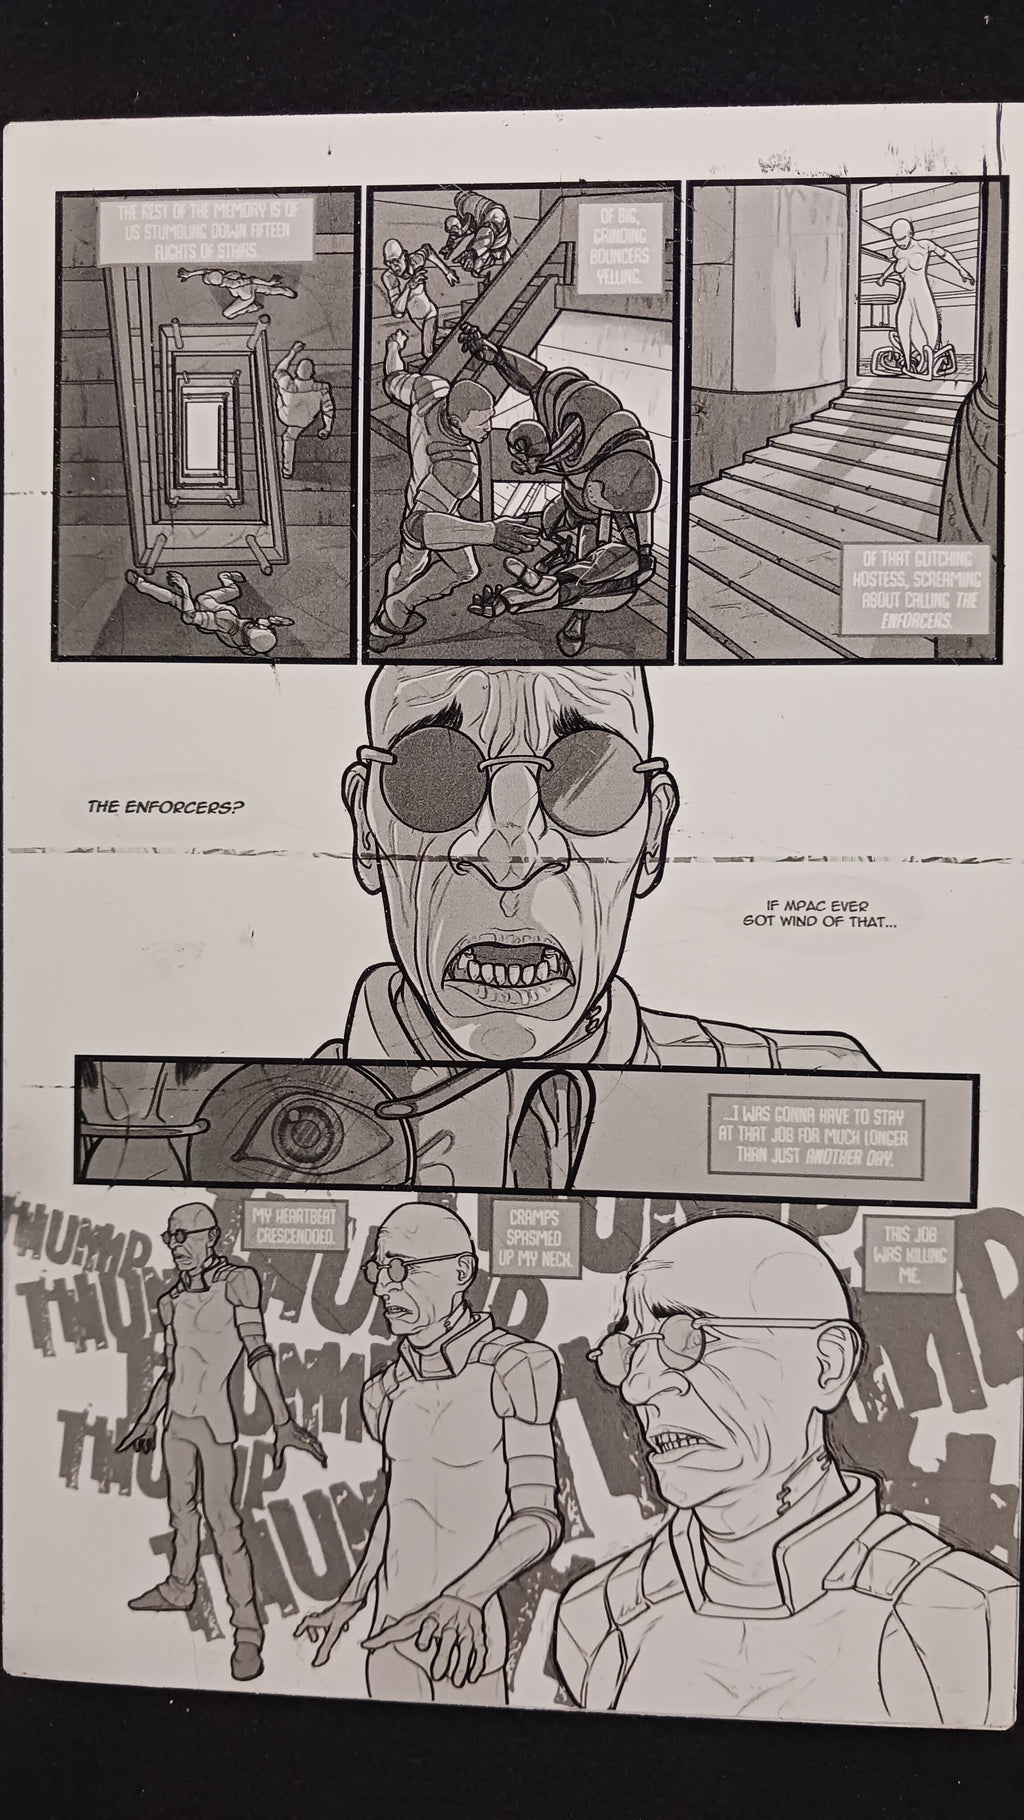 Lost Souls: Haywire #1 - Page 11 - PRESSWORKS - Comic Art - Printer Plate - Black